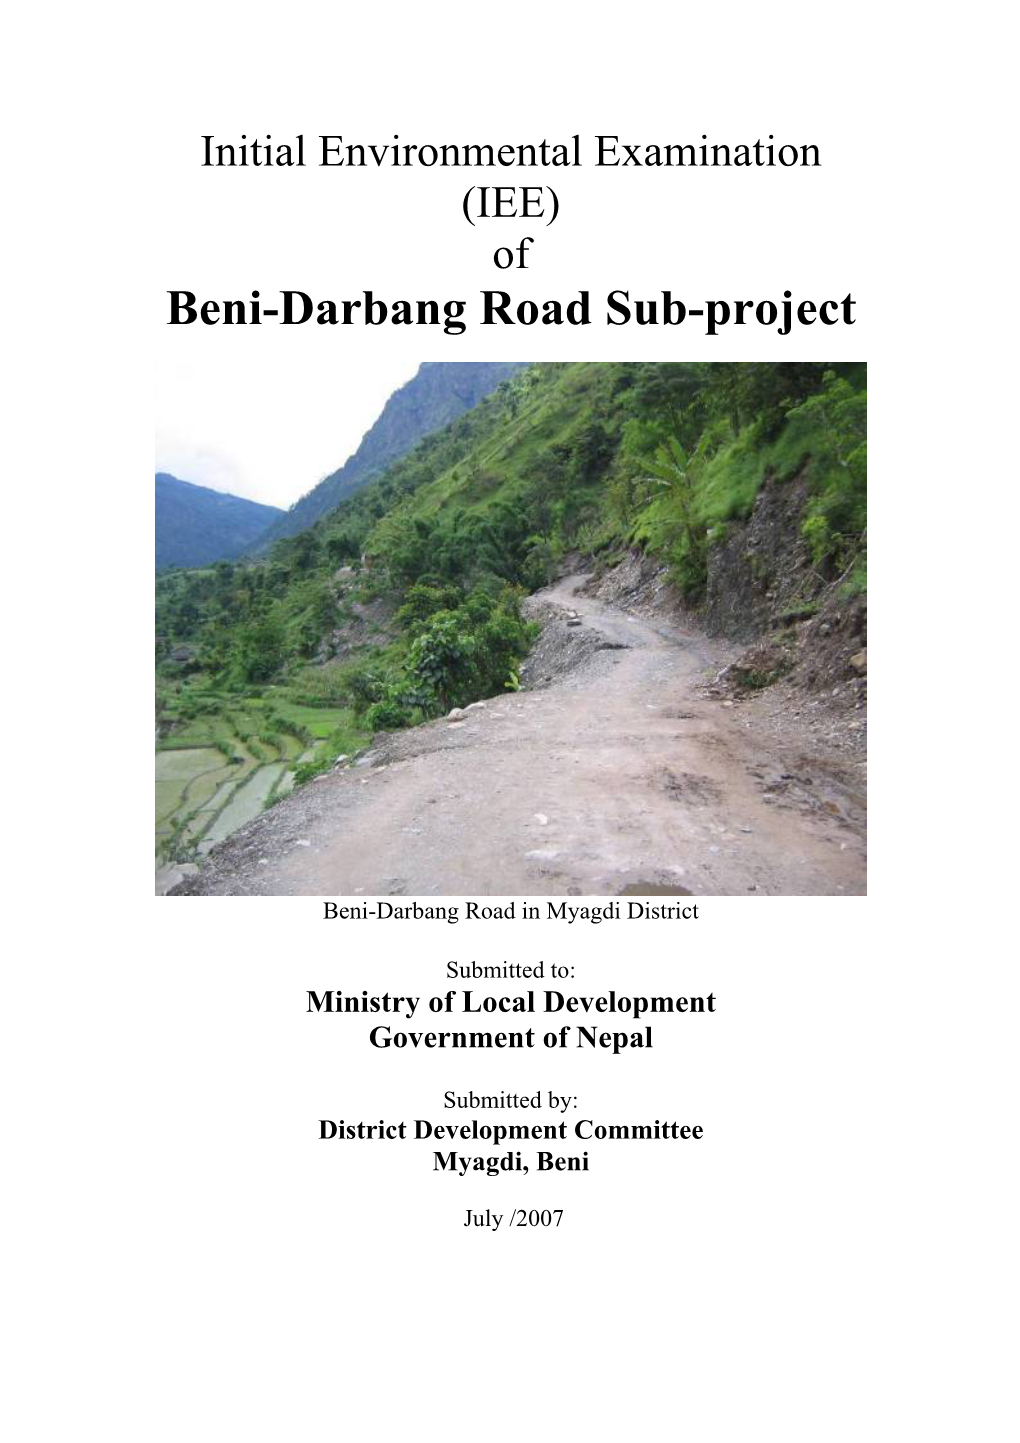 Beni-Darbang Road Sub-Project